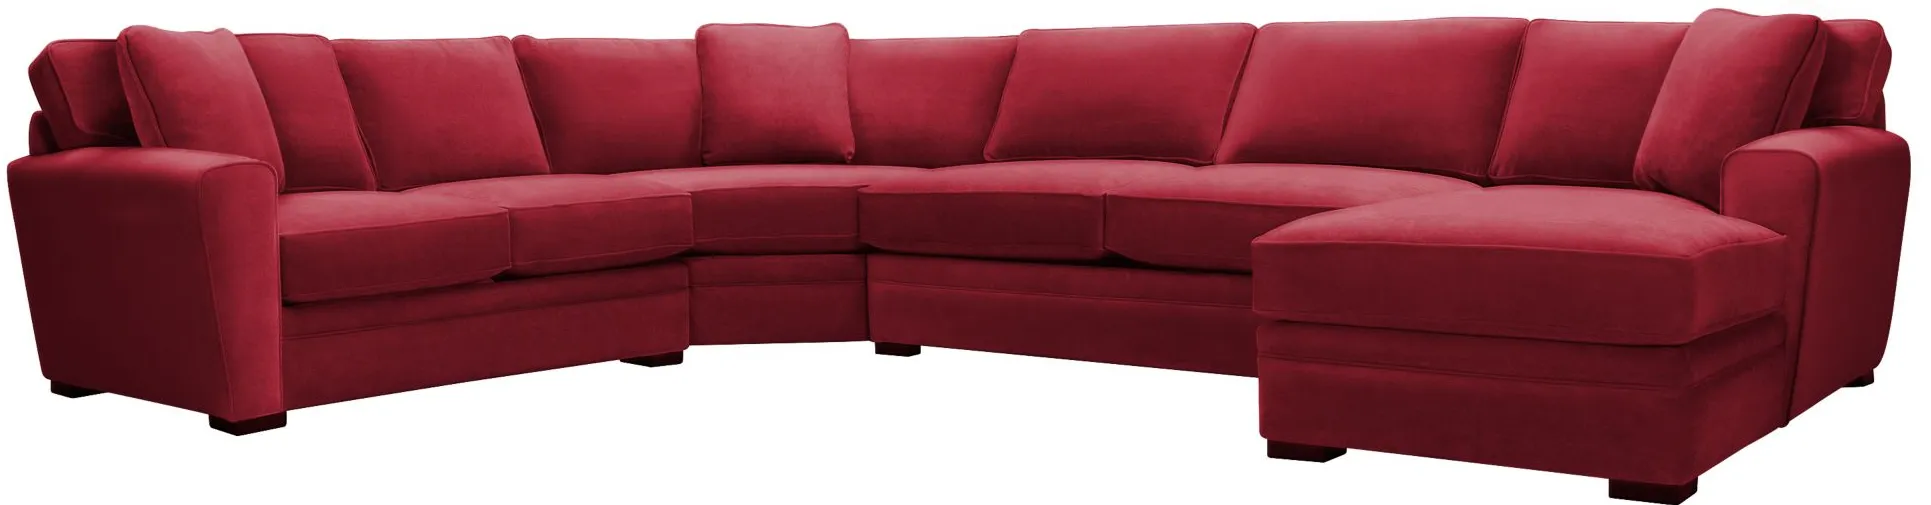 Artemis II 4-pc. Full Sleeper Sectional Sofa in Gypsy Scarlet by Jonathan Louis